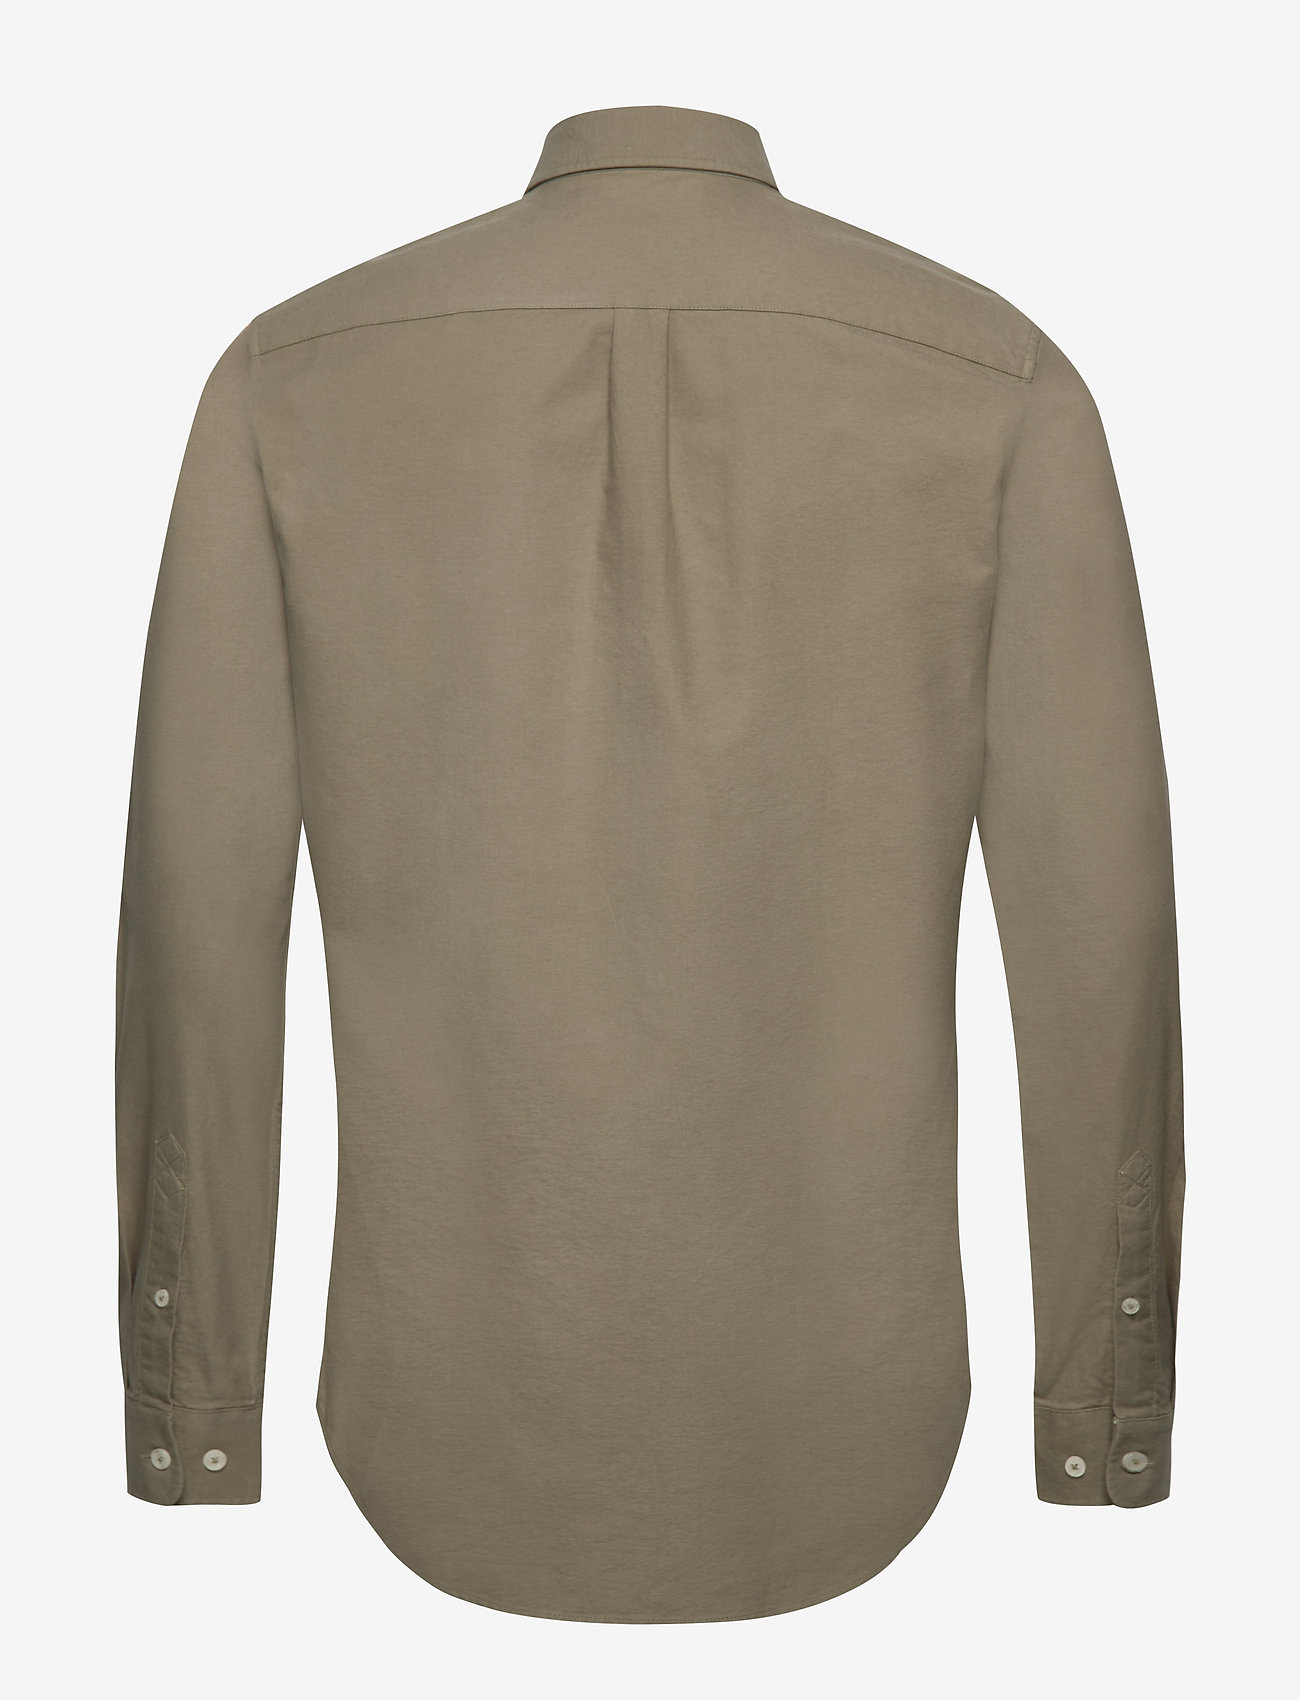 Samsøe Samsøe - Liam BX shirt 11389 - podstawowe koszulki - deep lichen green - 1